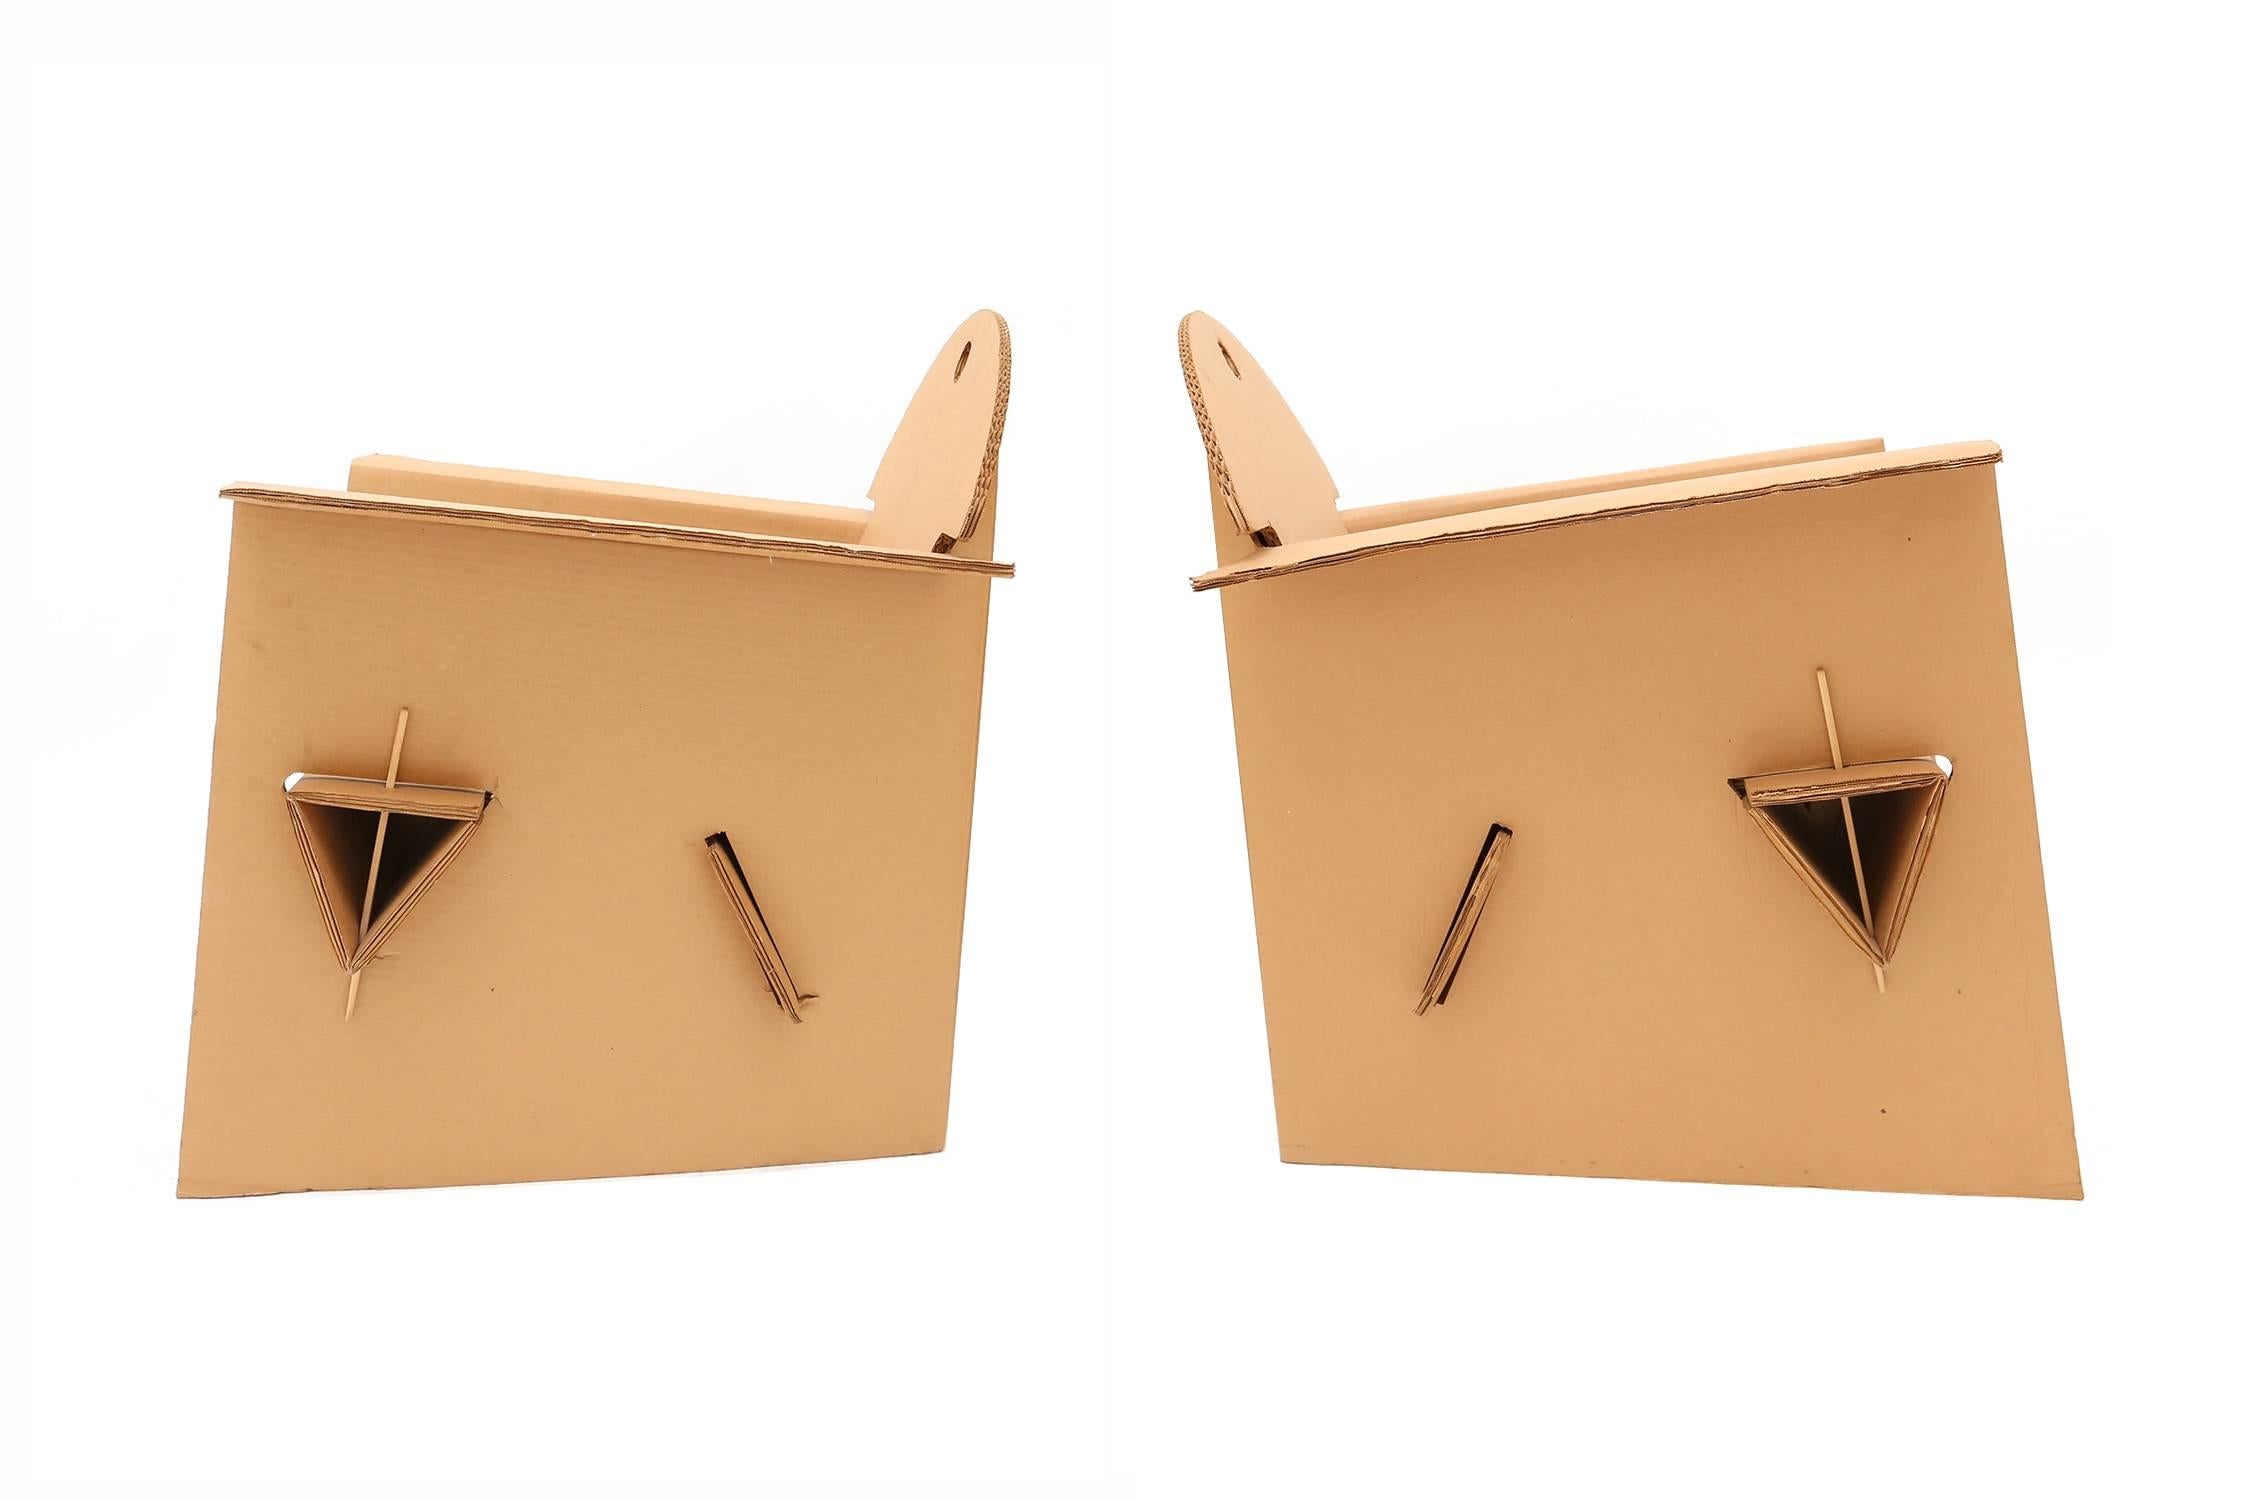 Modern Post-modern Arte Povere Olivier Leblois Cardboard Armchairs  